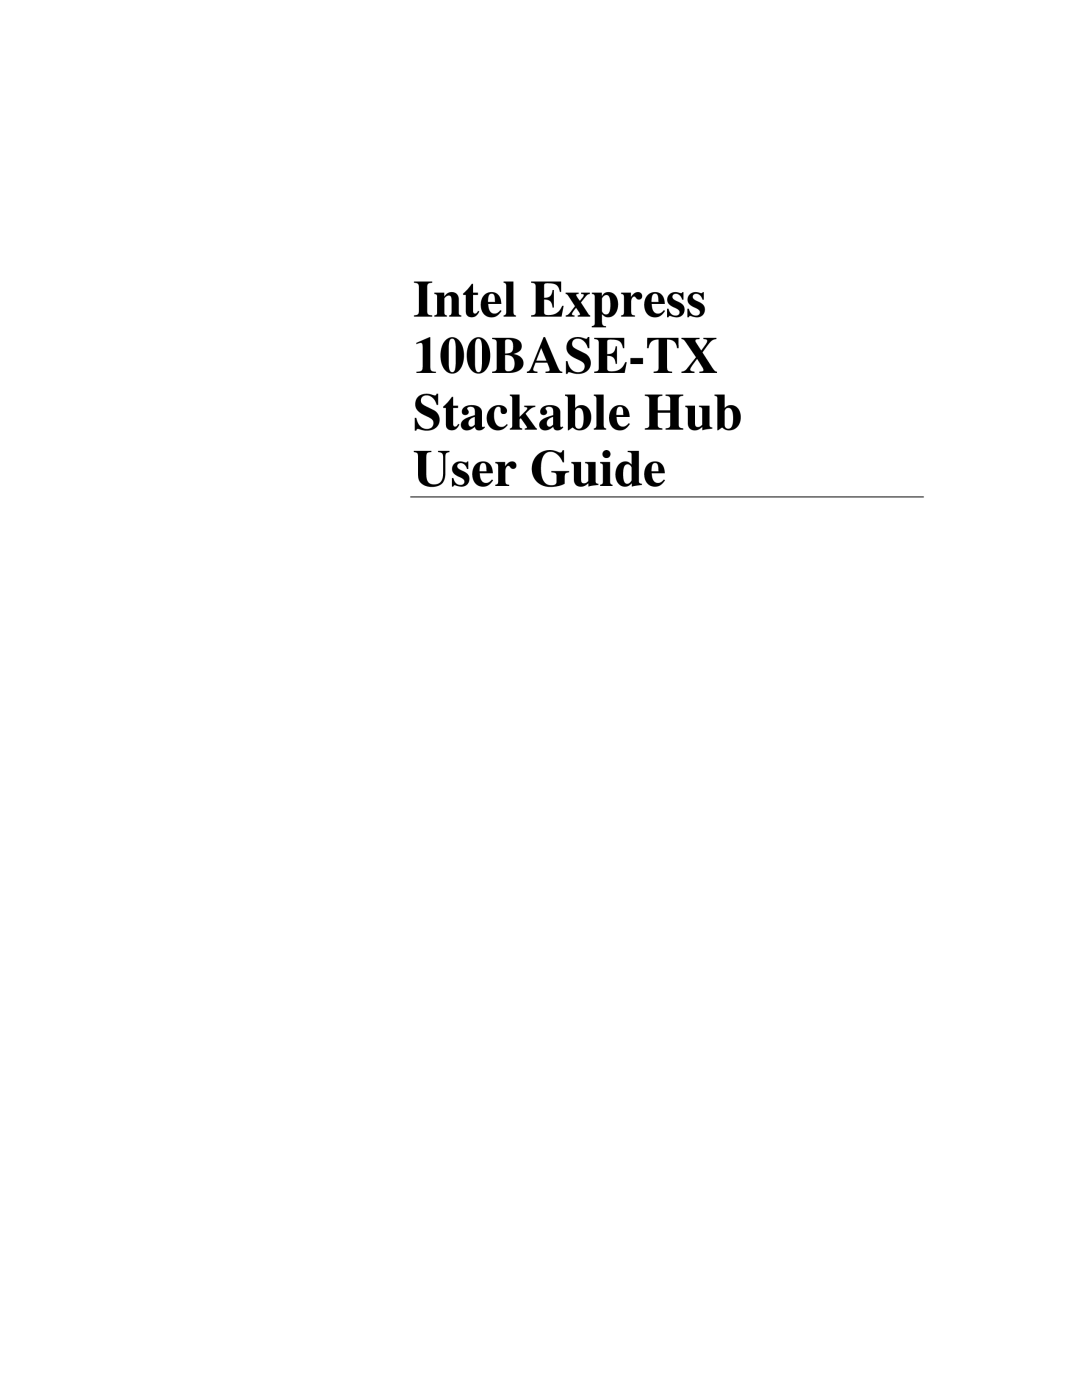 Intel manual Intel Express 100BASE-TX Stackable Hub User Guide 